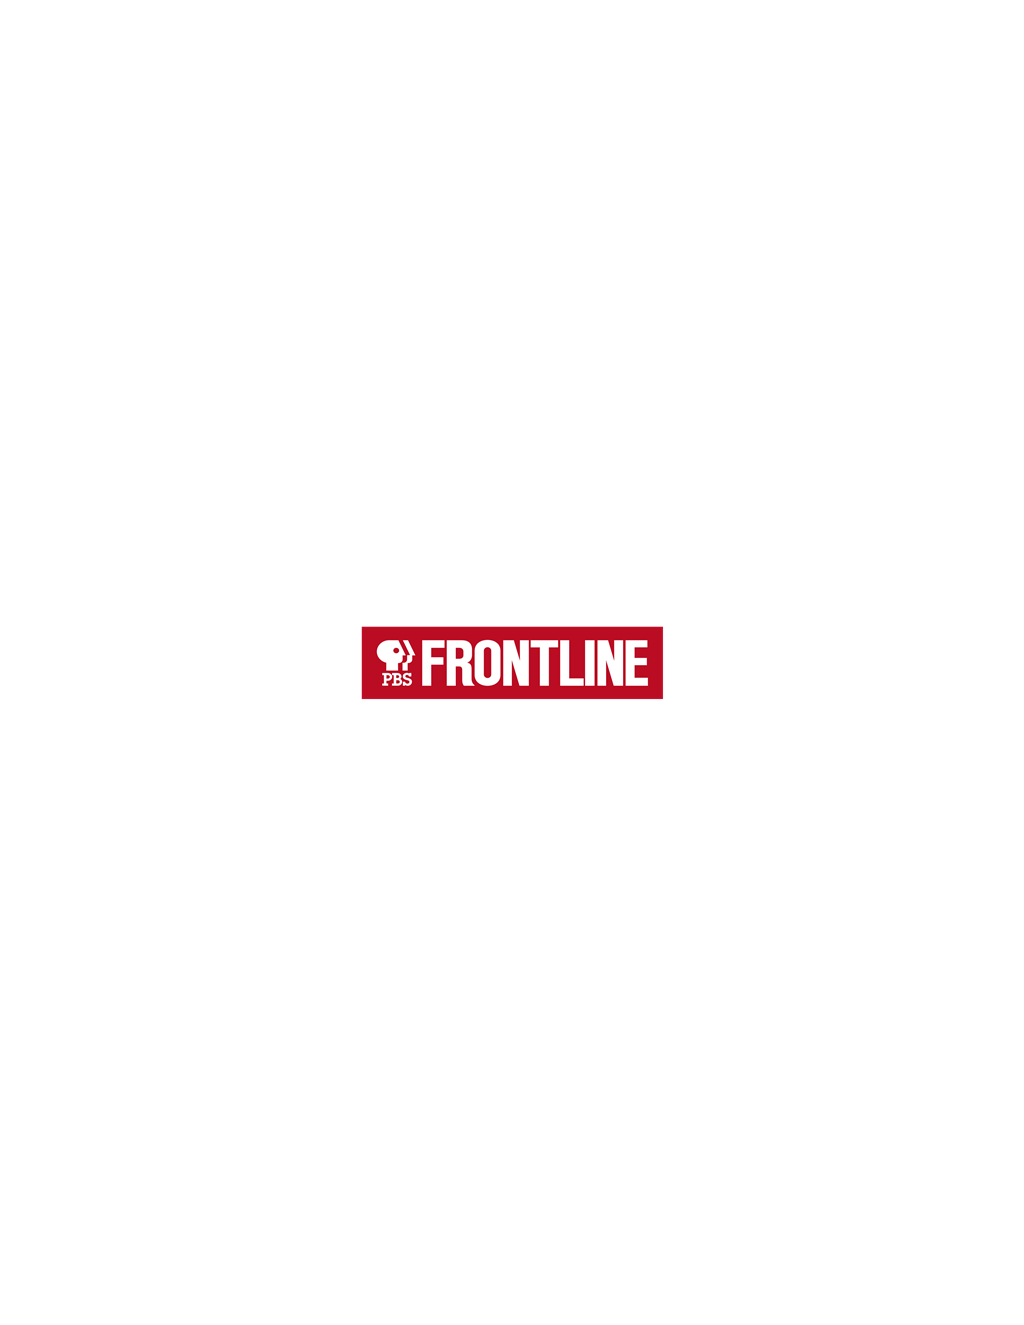 Frontline logotype, transparent .png, medium, large